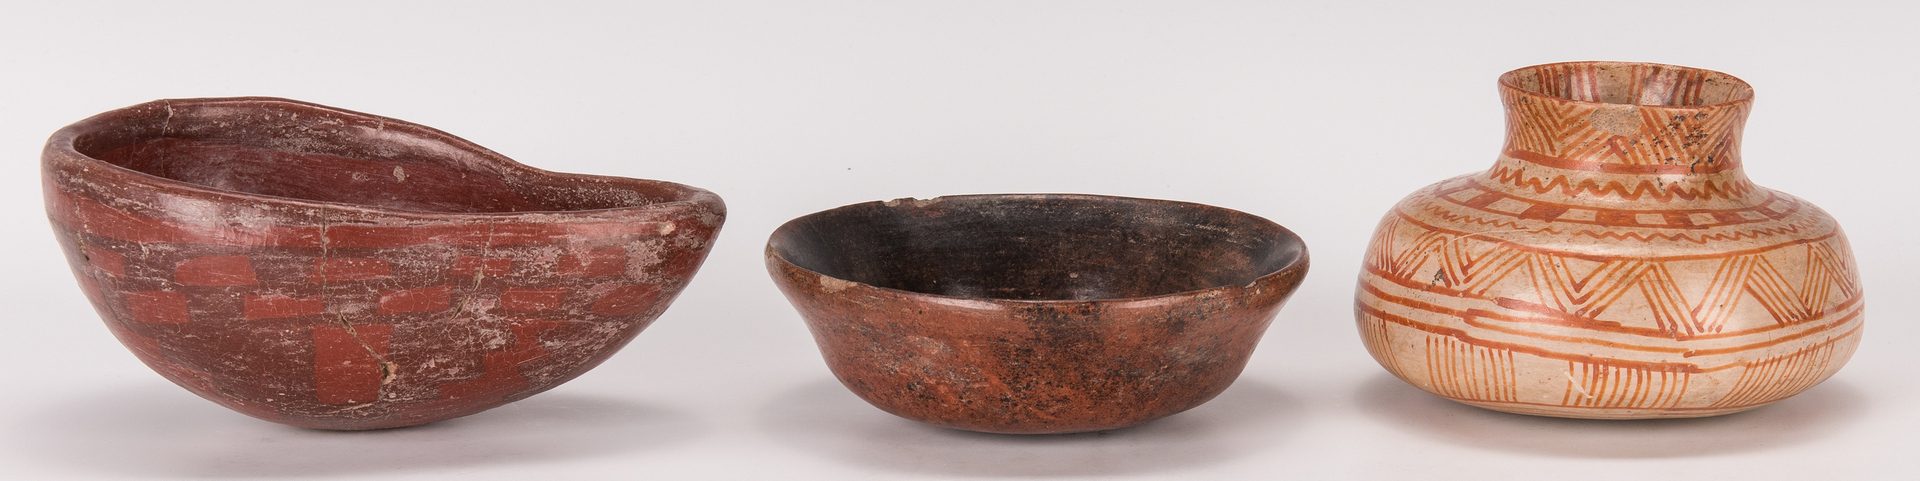 Lot 289: 6 Pre-Columbian Mesoamerican Items, incl. Pottery